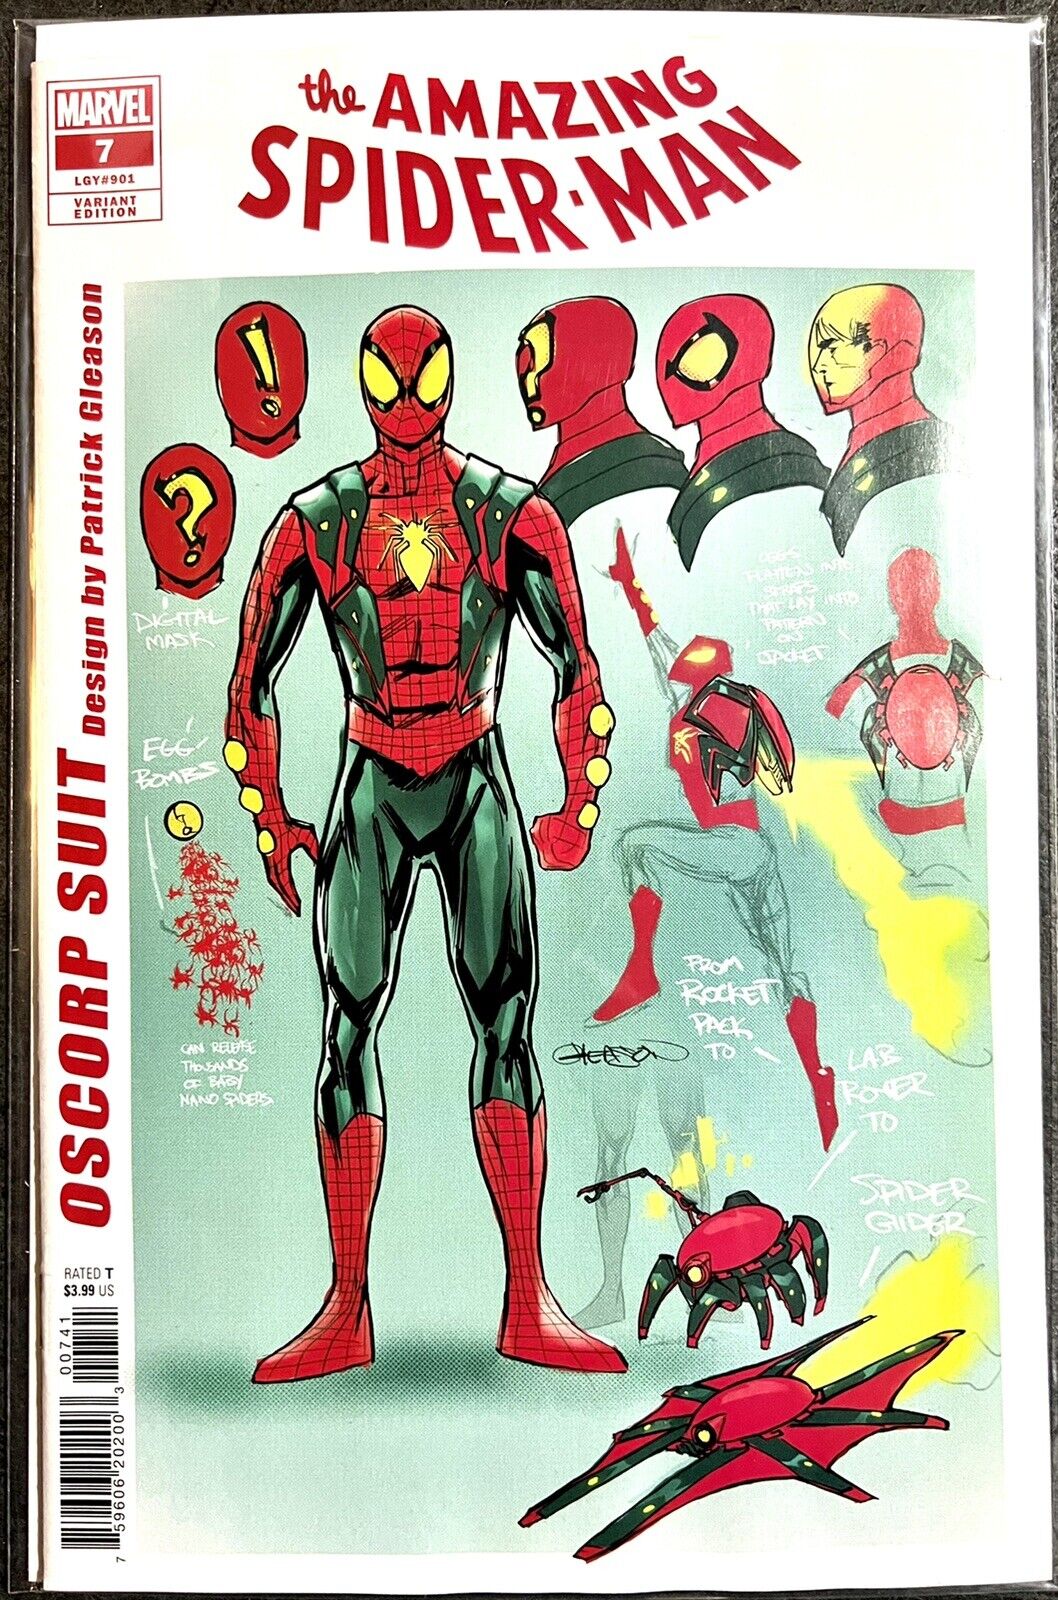 🚨🔥🕷 AMAZING SPIDER-MAN #7 PATRICK GLEASON Oscorp 1:10 Ratio Design Variant